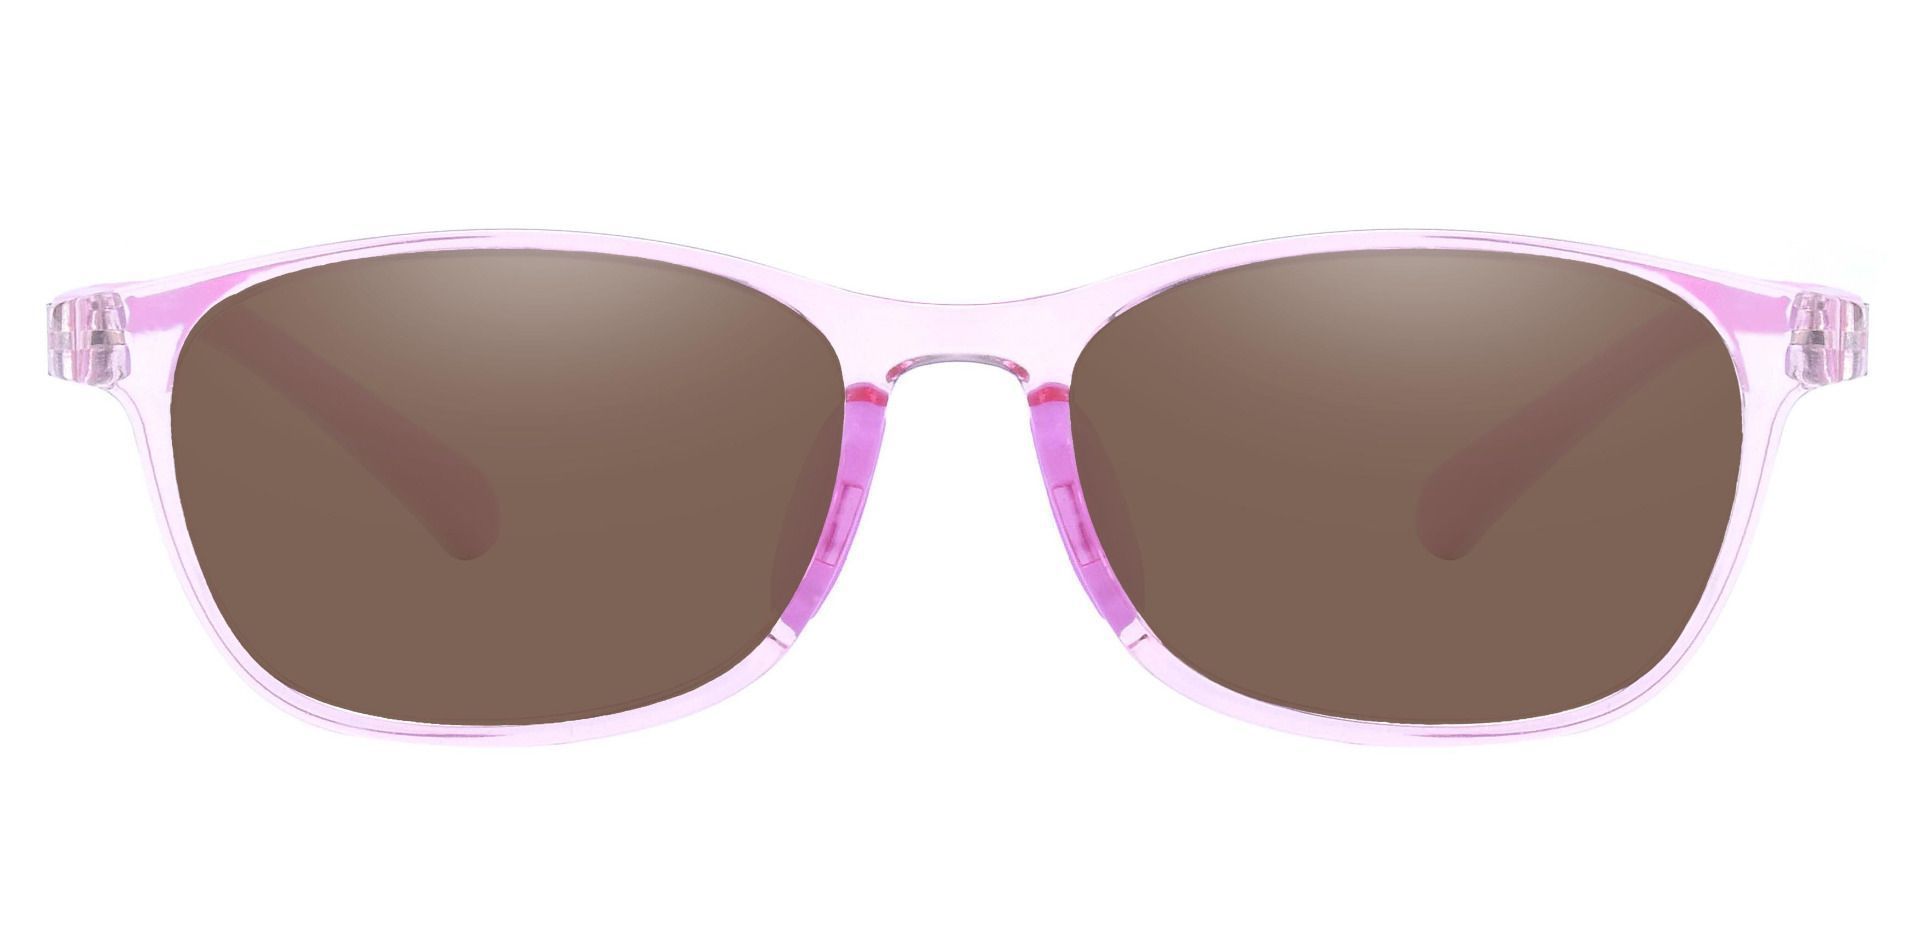 Cosmo Rectangle Prescription Sunglasses - Purple Frame With Brown Lenses